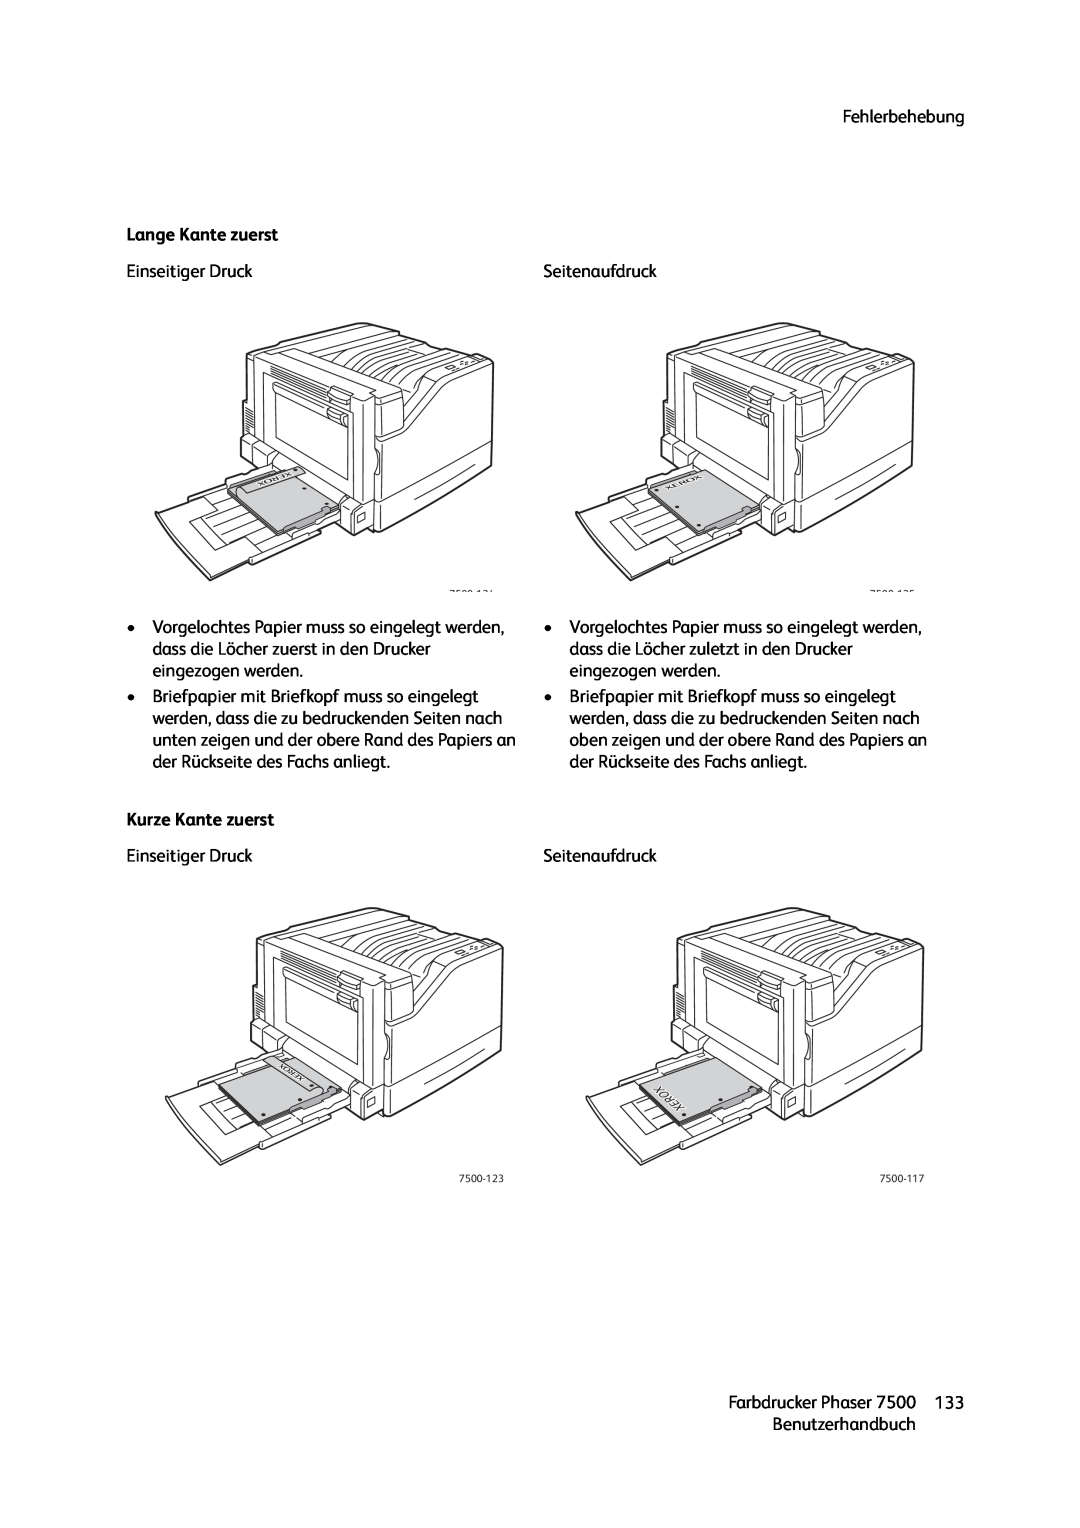 Xerox 7500 color printer manual Lange Kante zuerst, Kurze Kante zuerst 